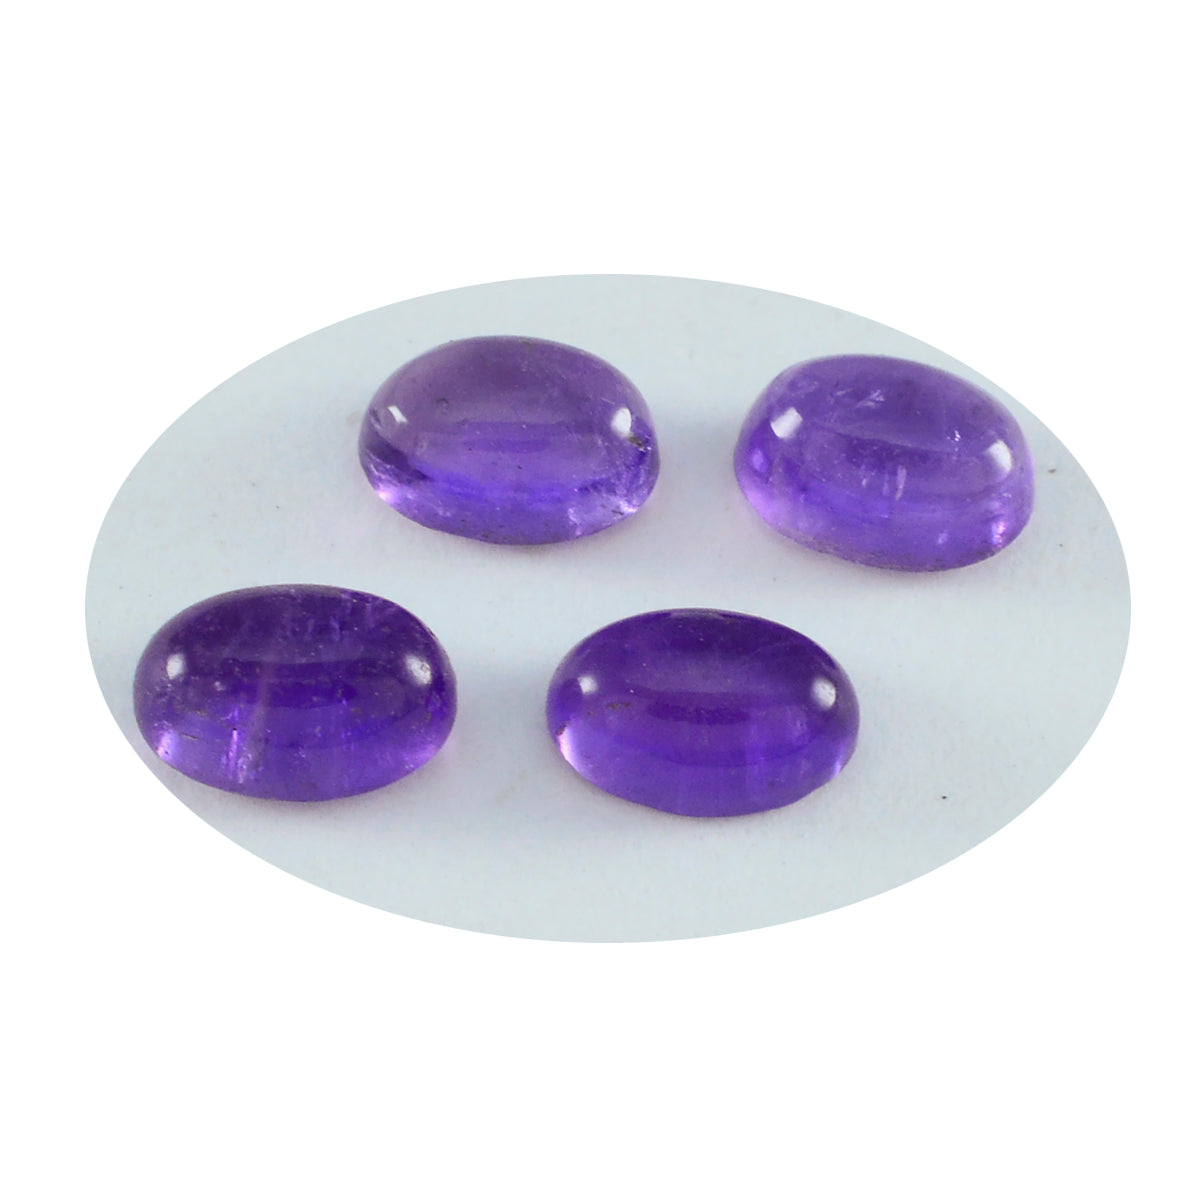 riyogems 1 cabochon di ametista viola da 5x7 mm di forma ovale, pietra preziosa di buona qualità